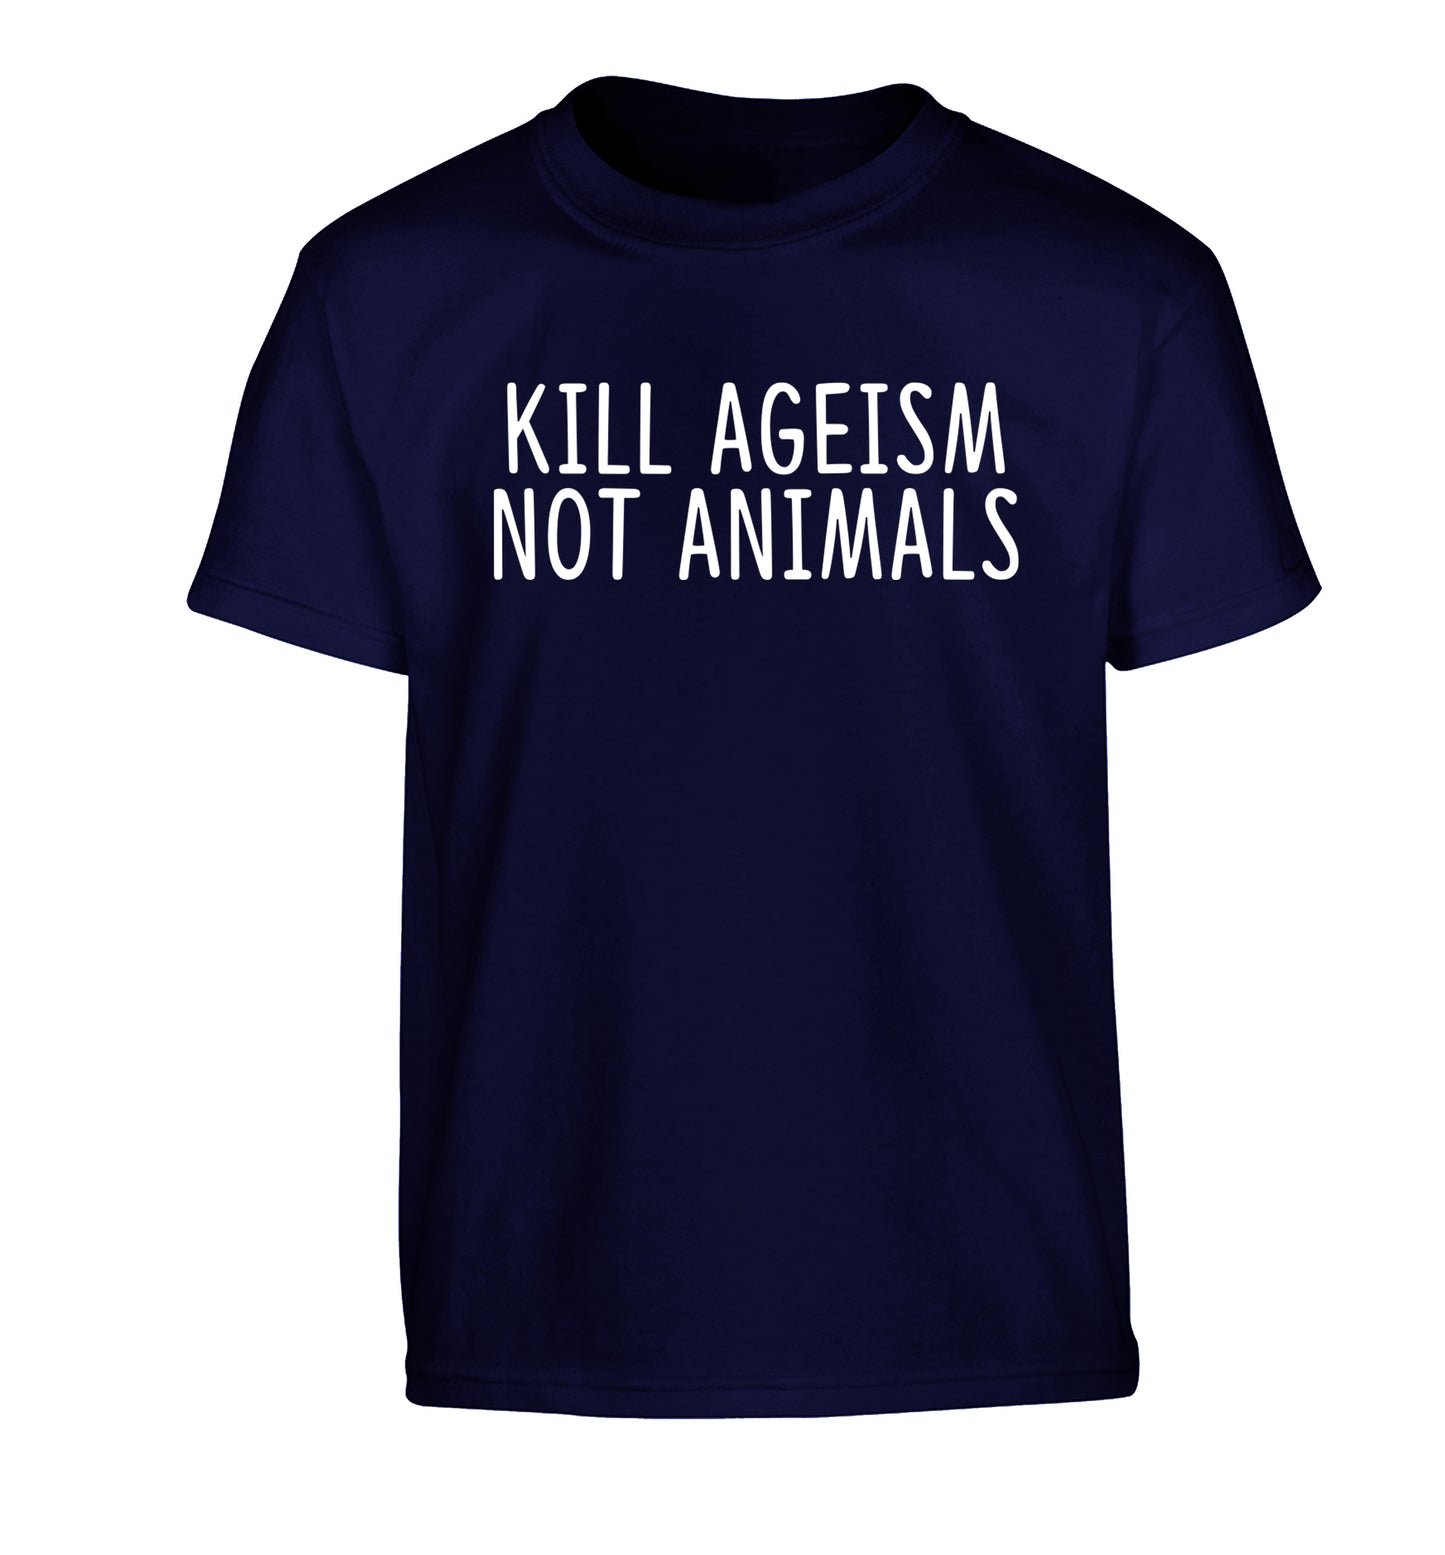 Kill Ageism Not Animals Children's navy Tshirt 12-13 Years